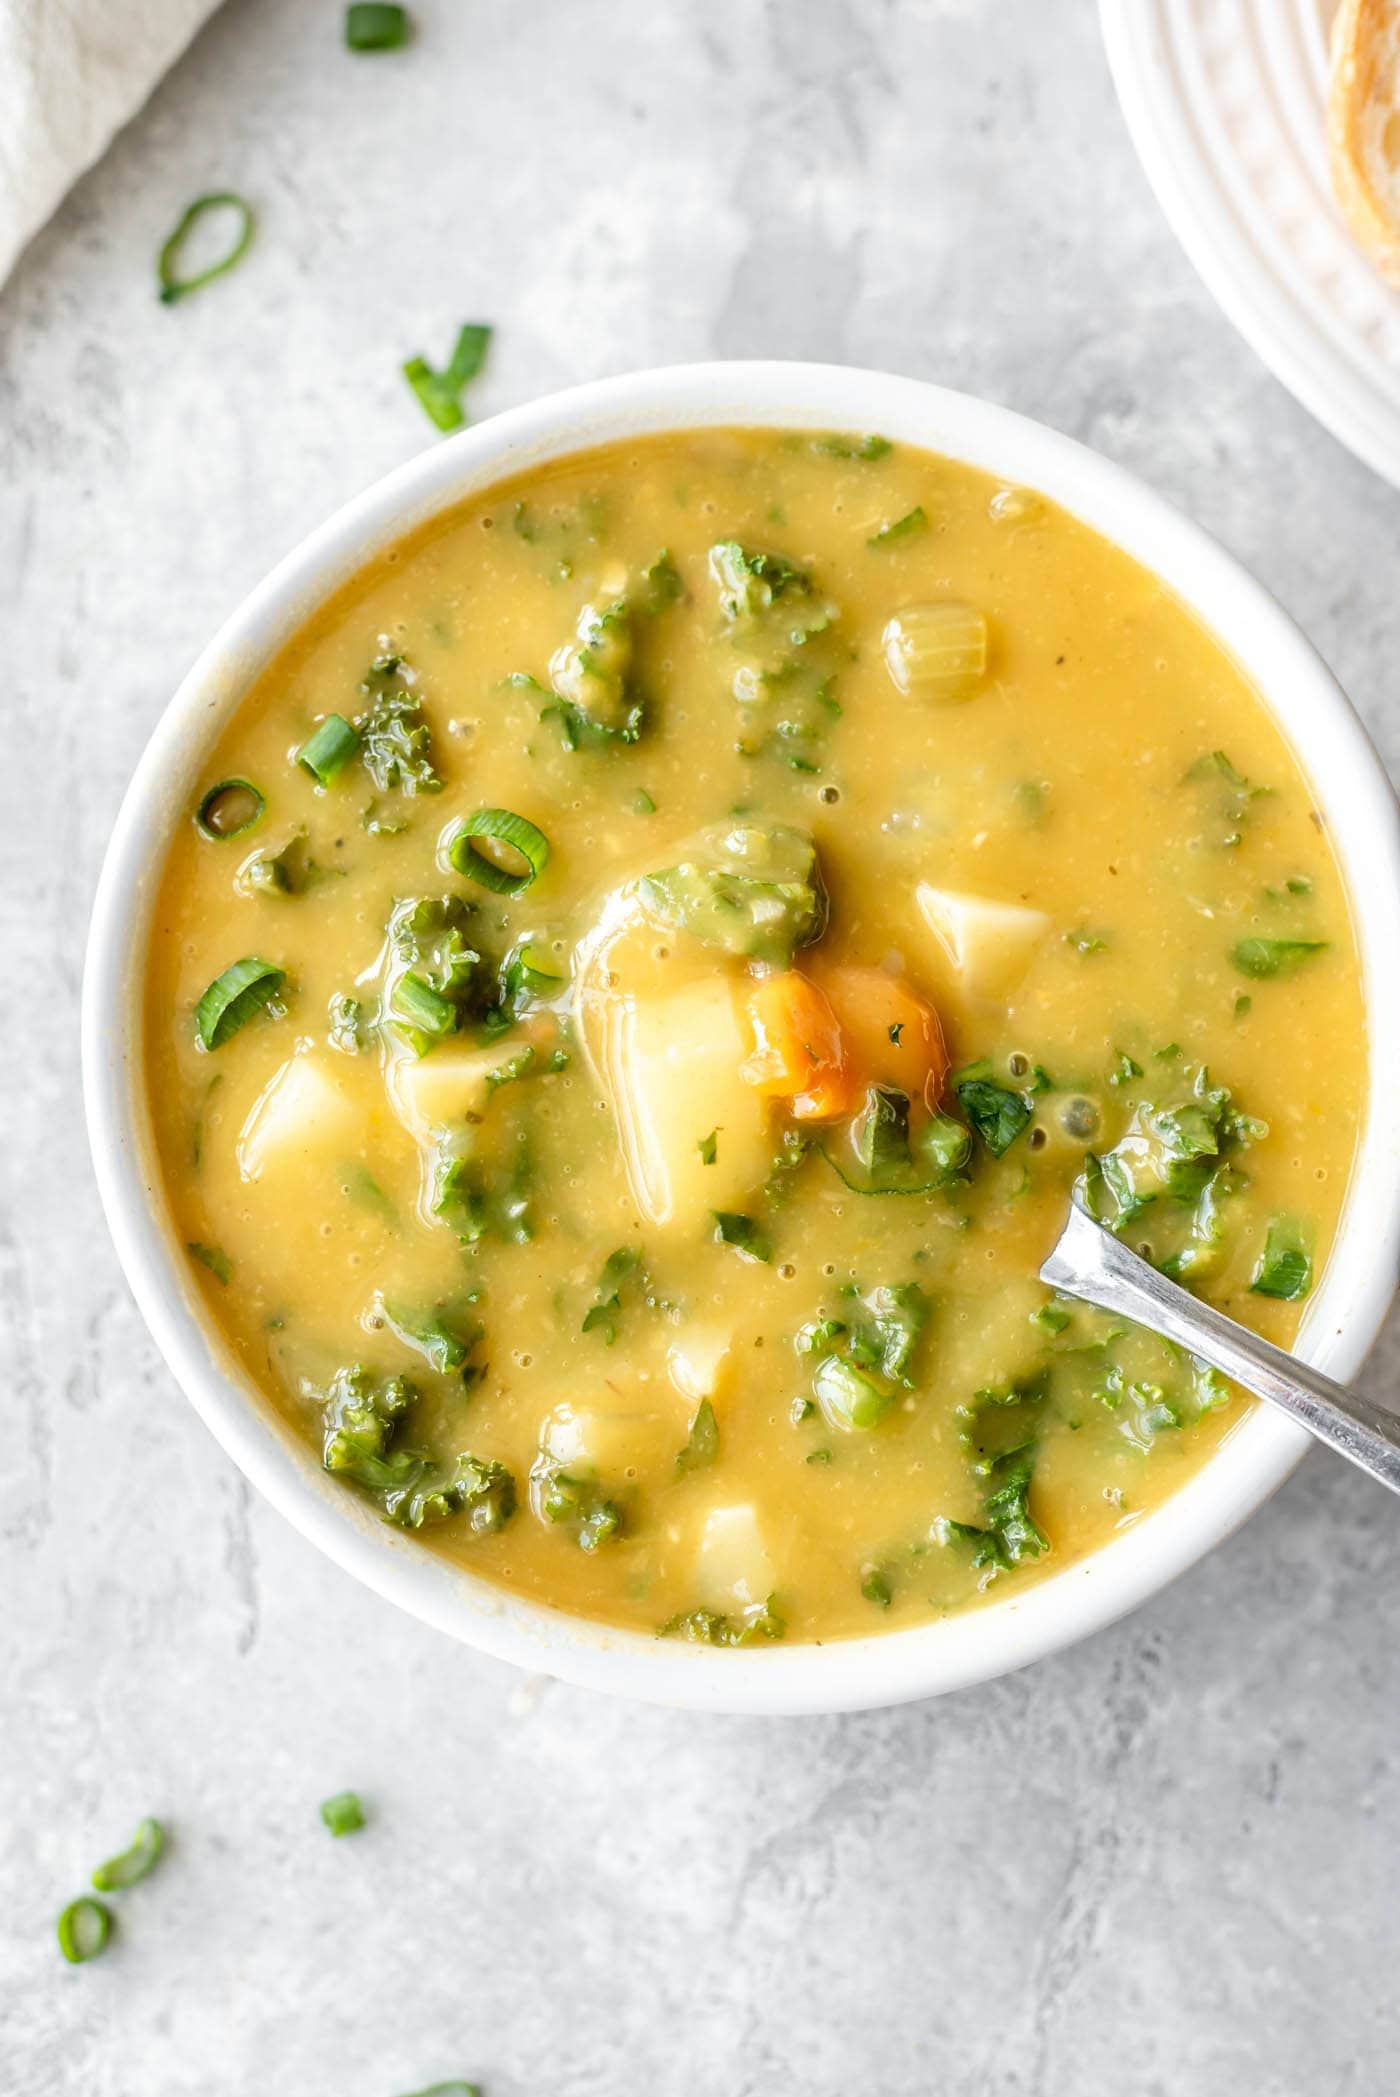 https://runningonrealfood.com/wp-content/uploads/2013/04/healthy-vegan-instant-pot-kale-potato-soup-running-on-real-food-11.jpg